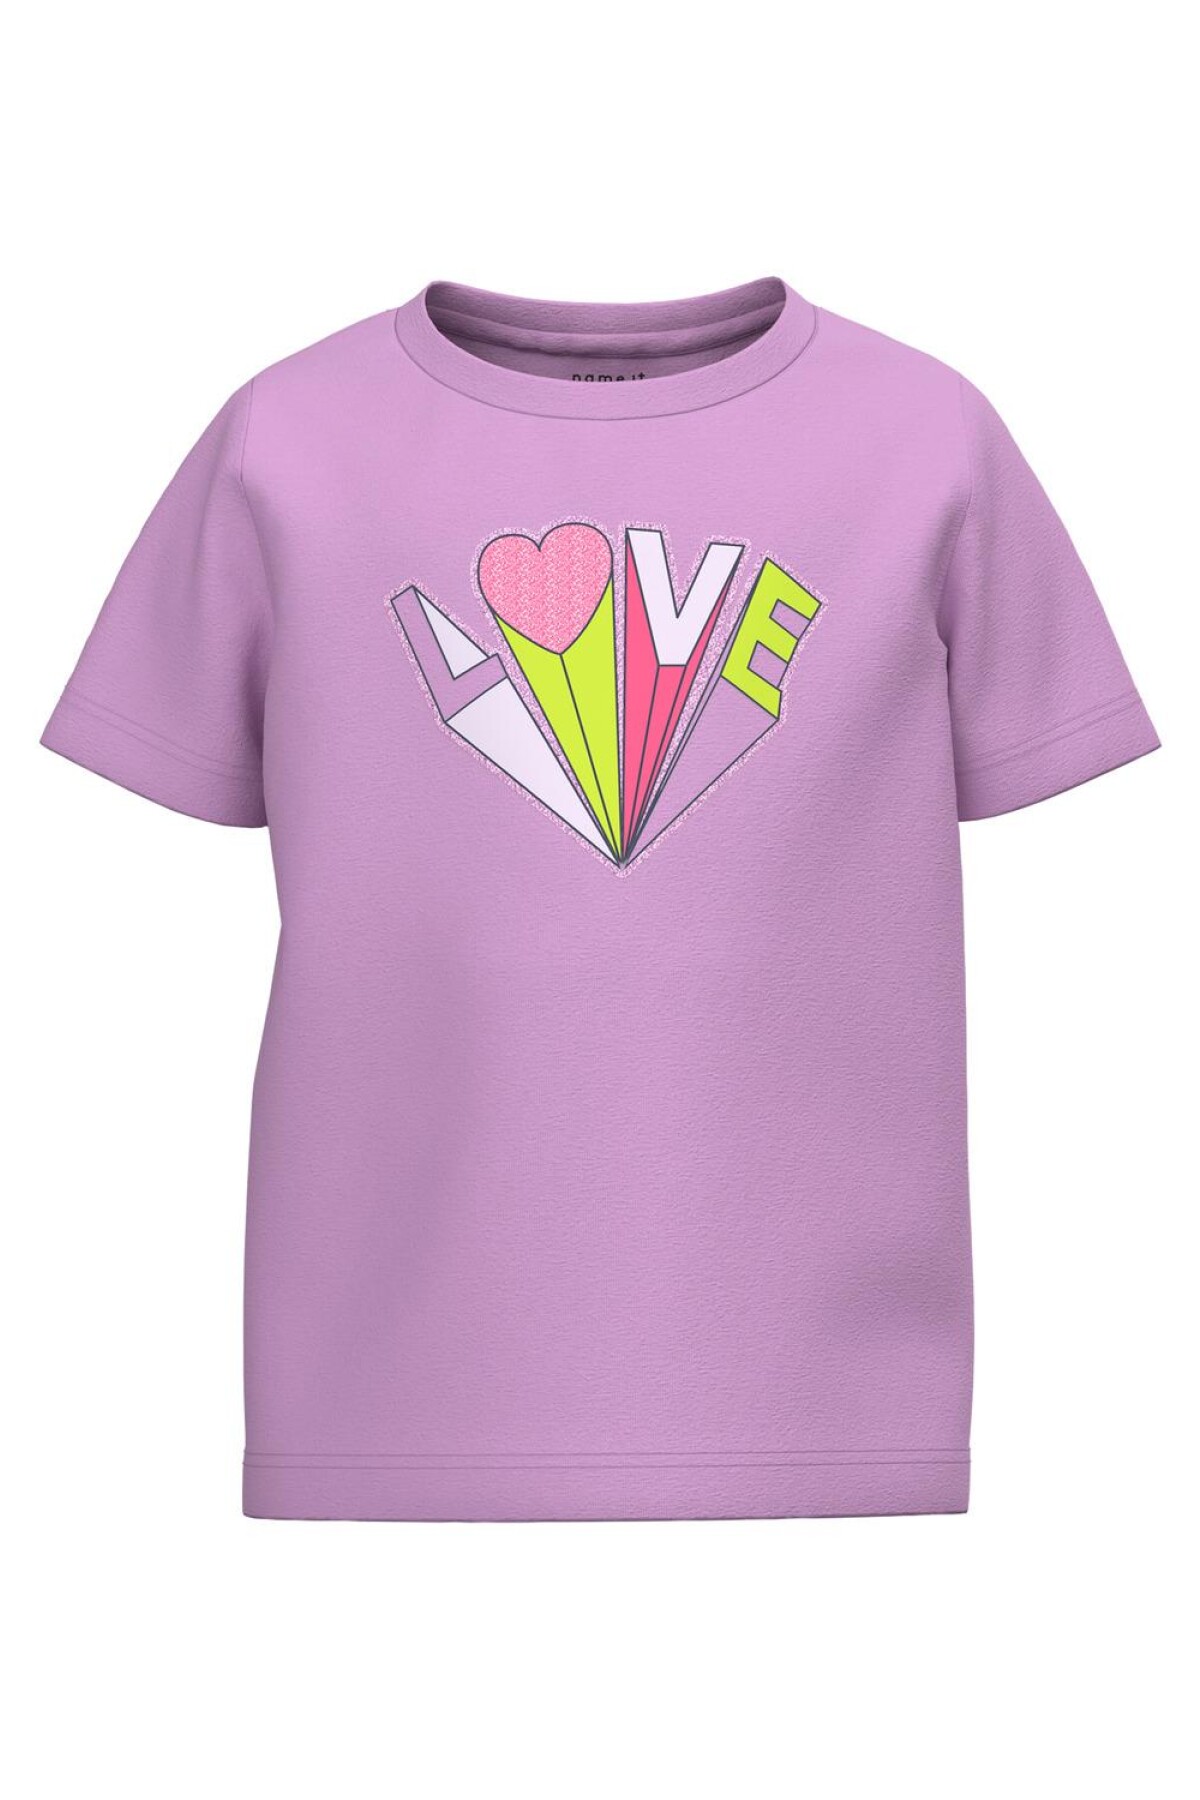 Camiseta Kleo Violet Tulle